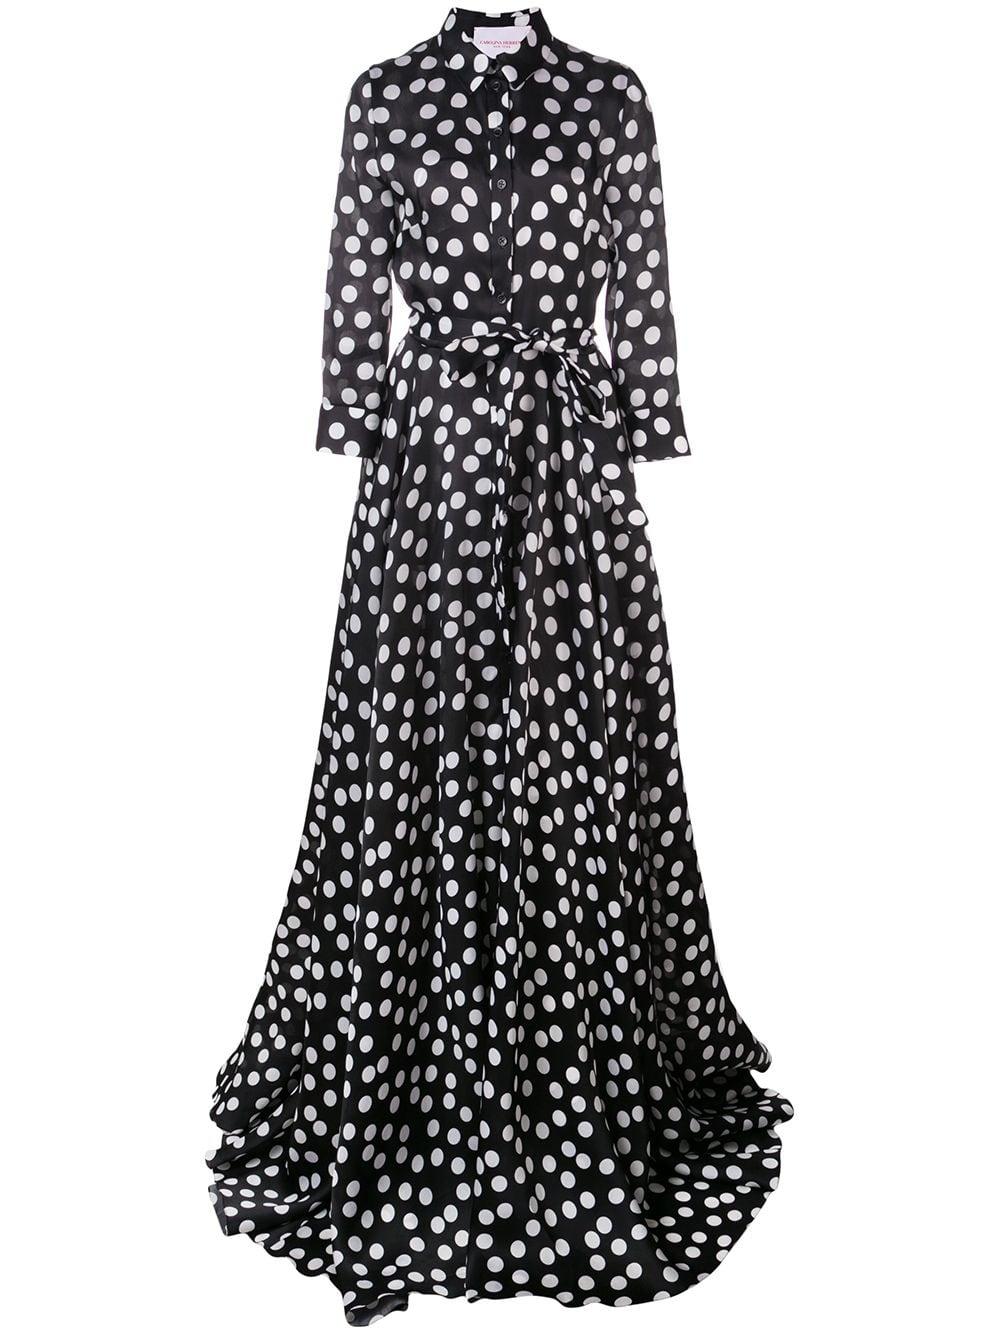 Carolina Herrera Polka Dot Print Dress in Black | Lyst Australia